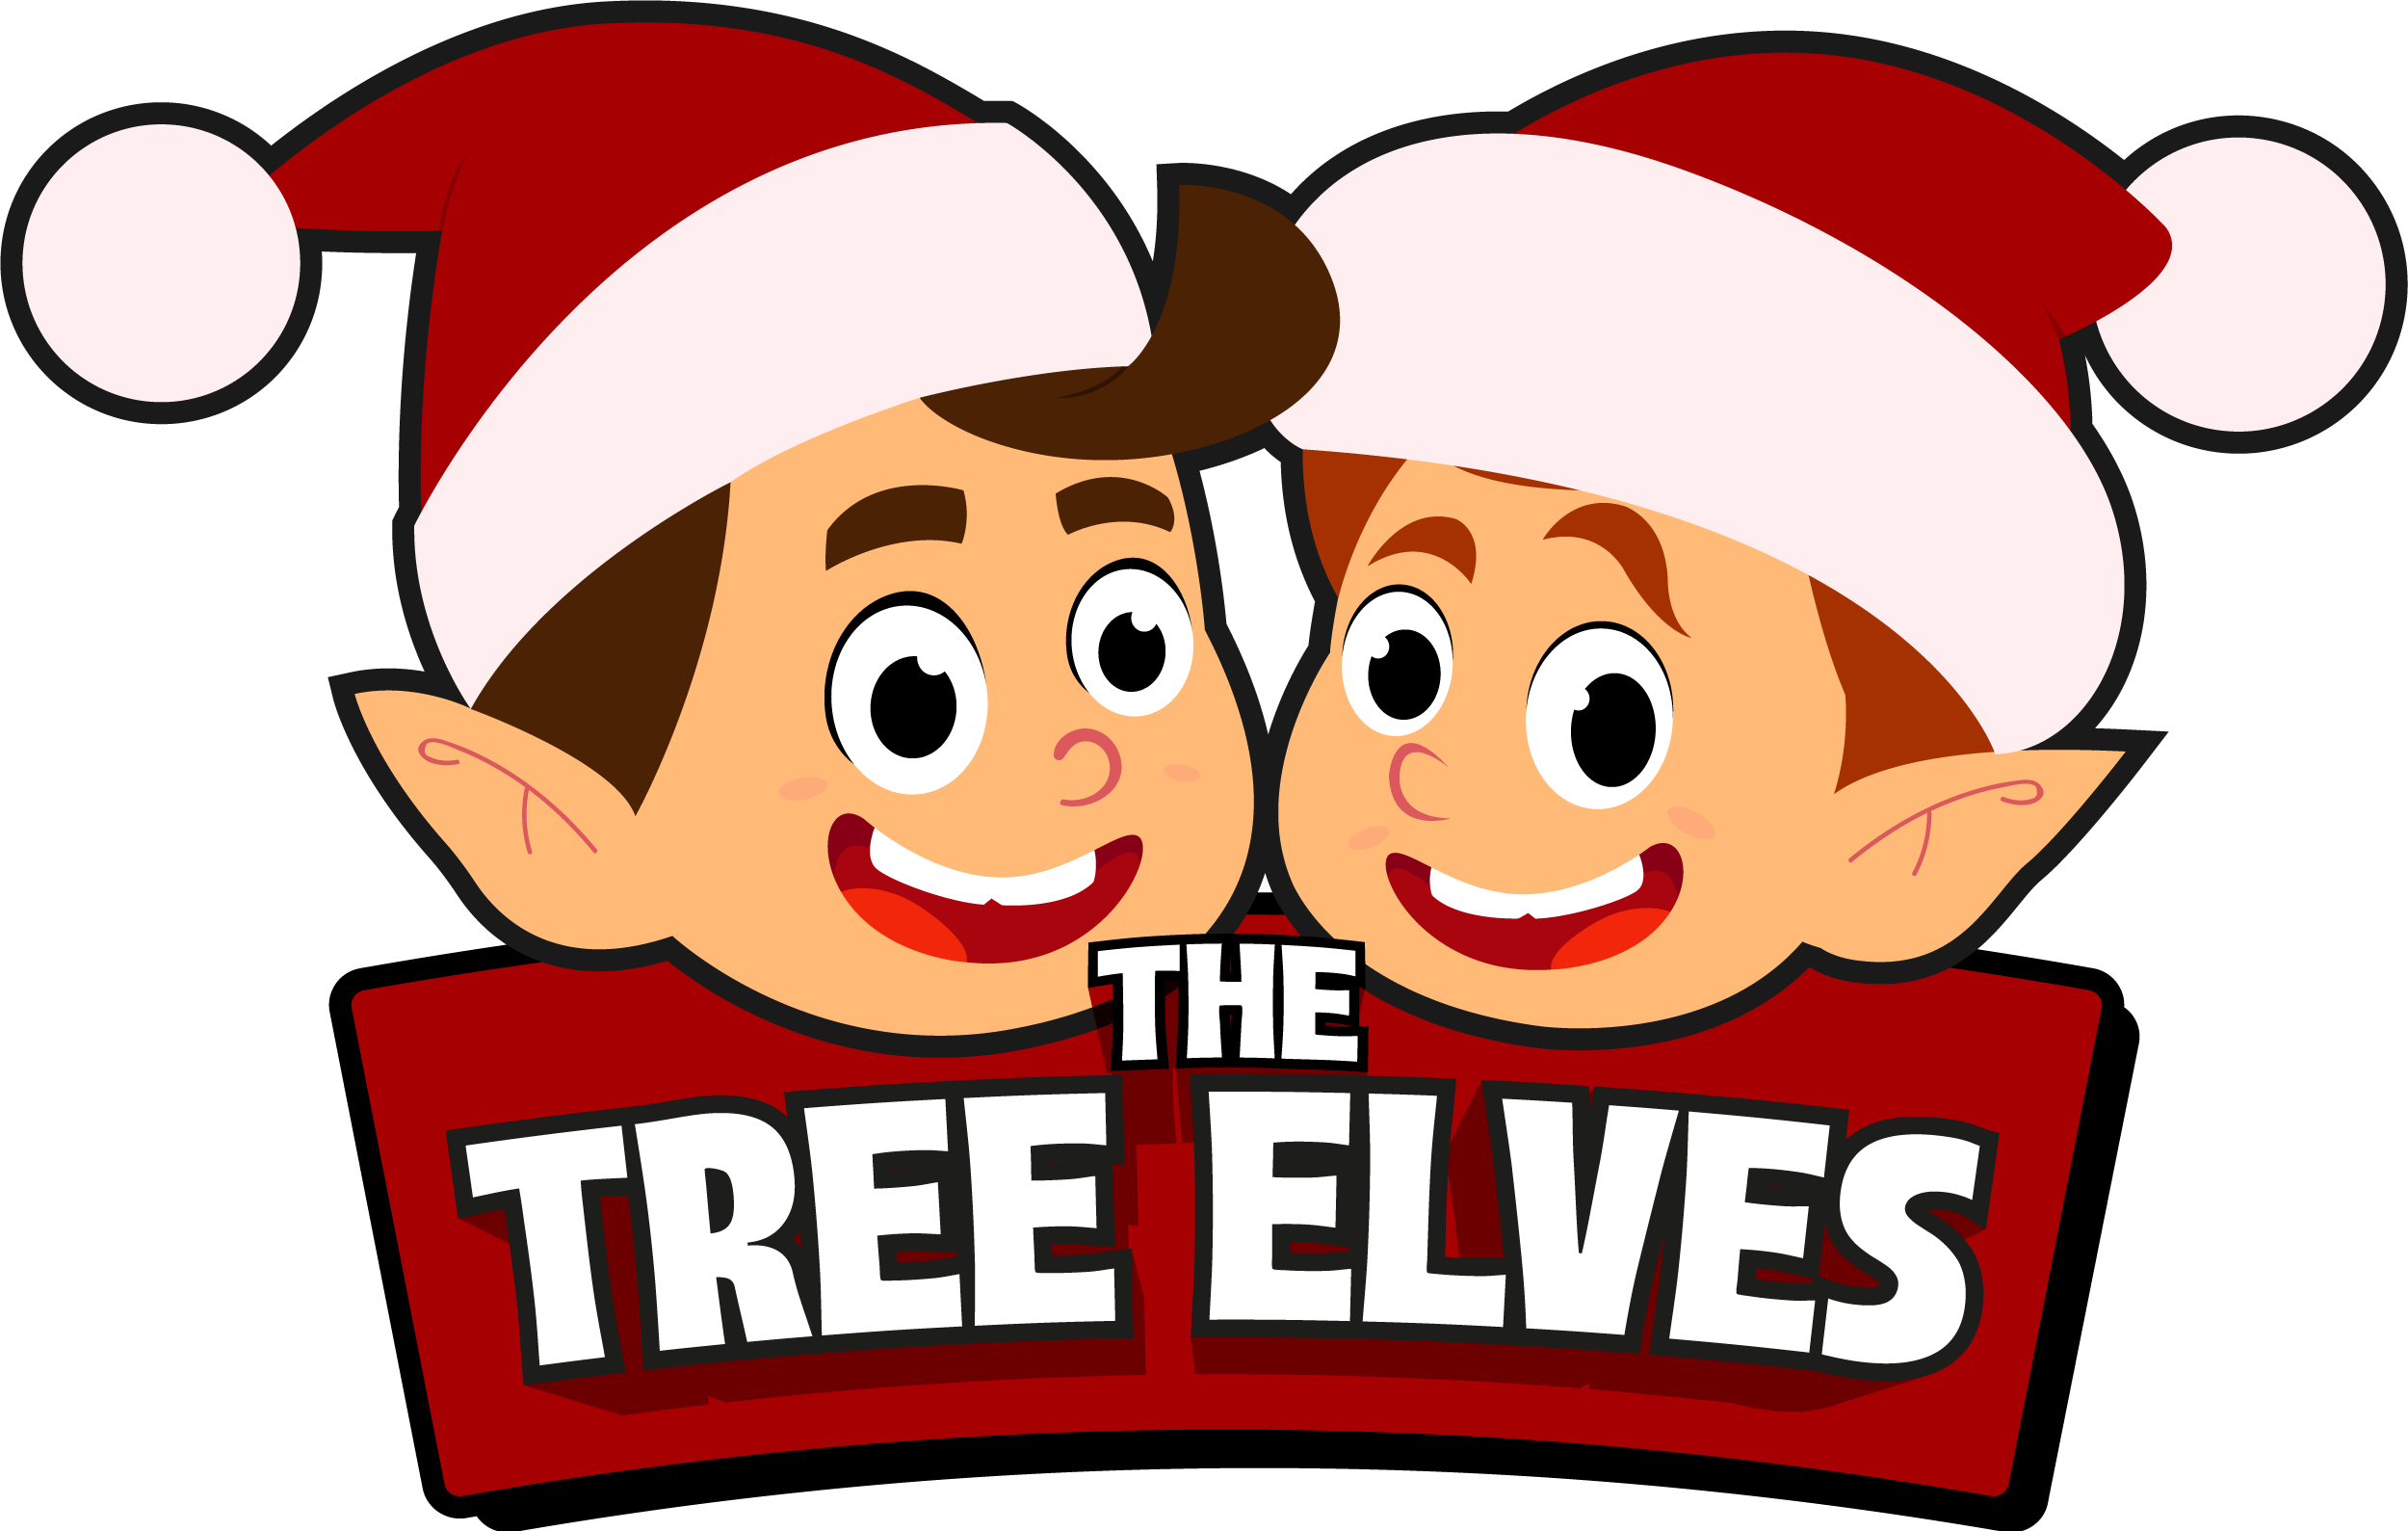 Real Christmas Tree Elves